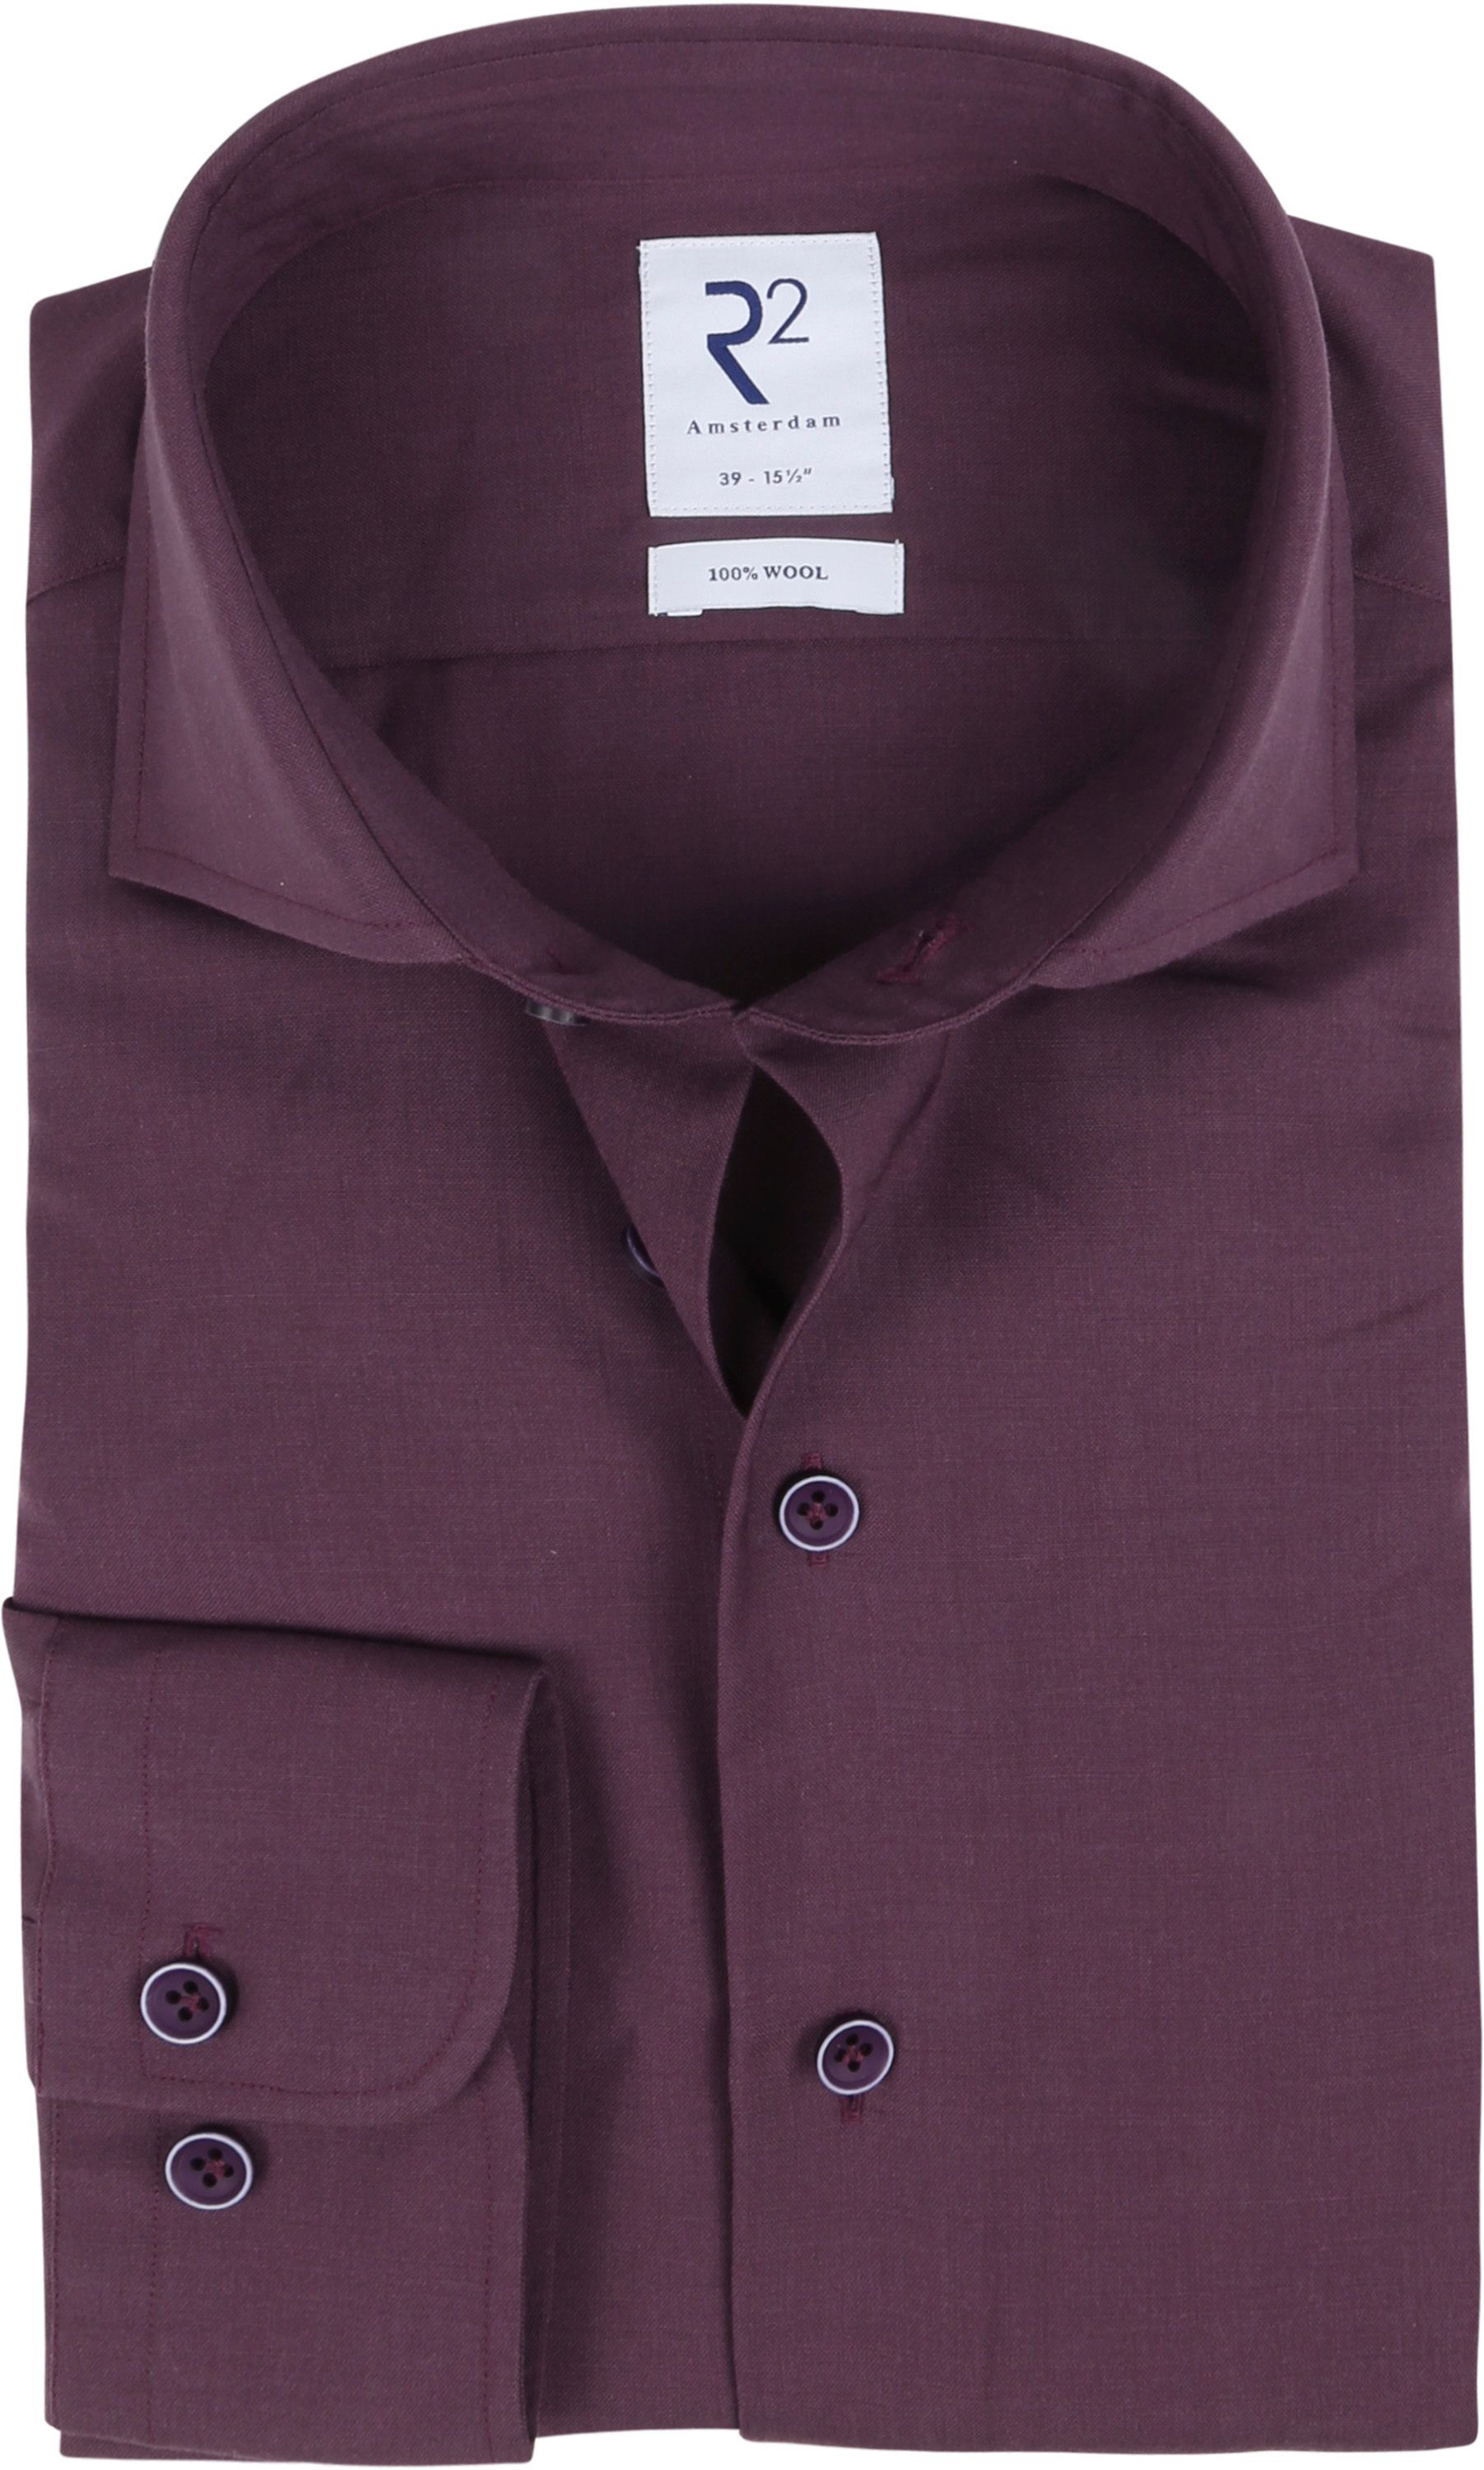 R2 Shirt Merino Wool Purple size 14.5